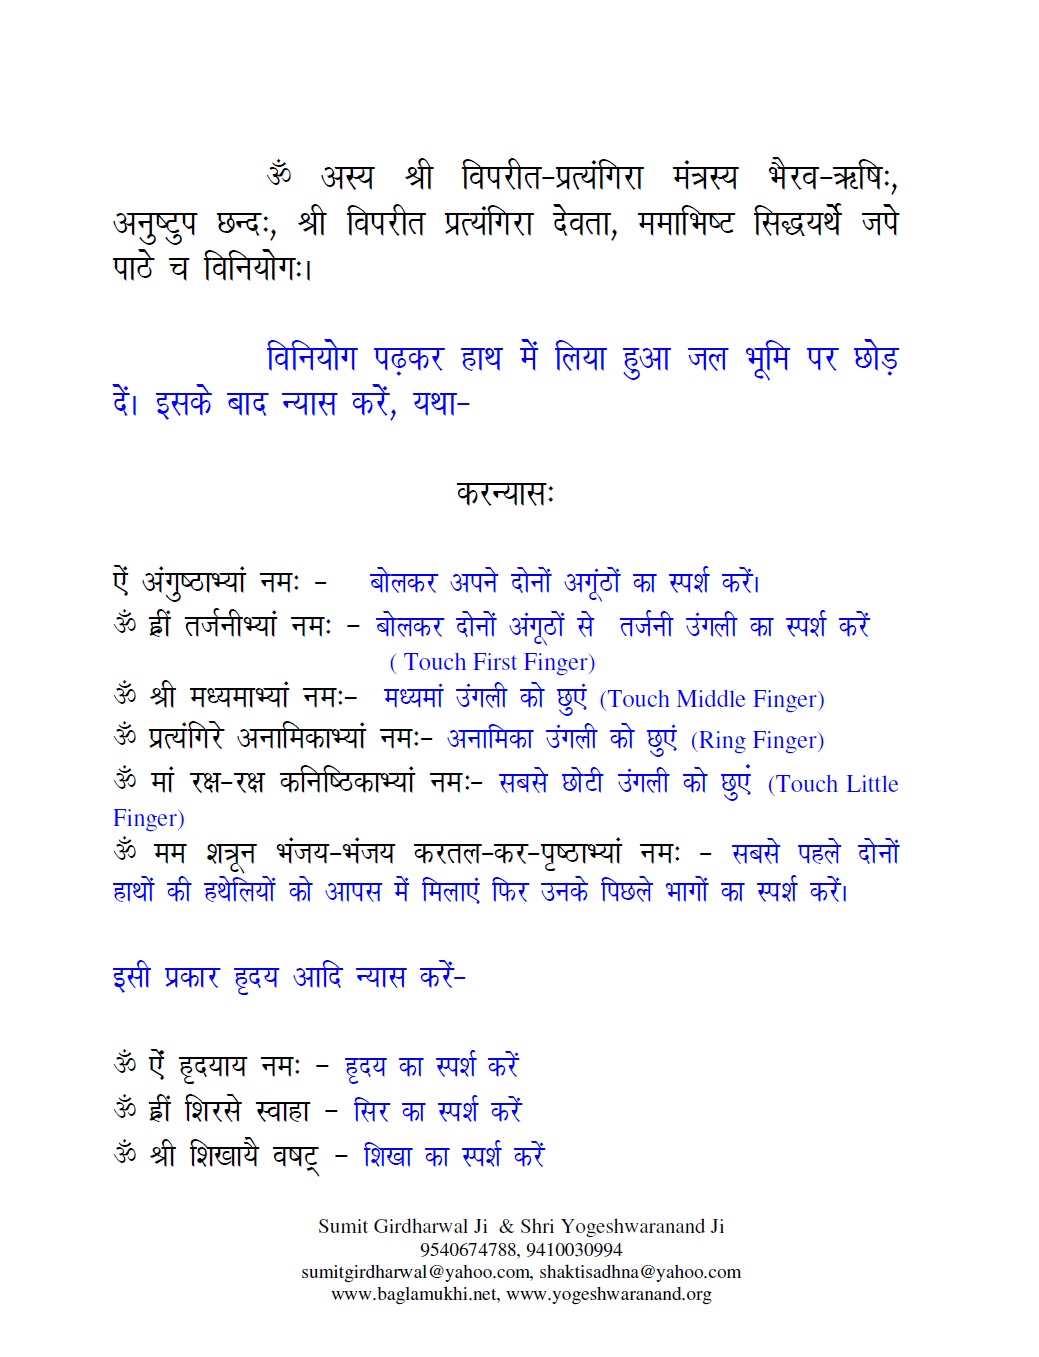 Kamakhya tantra english pdf